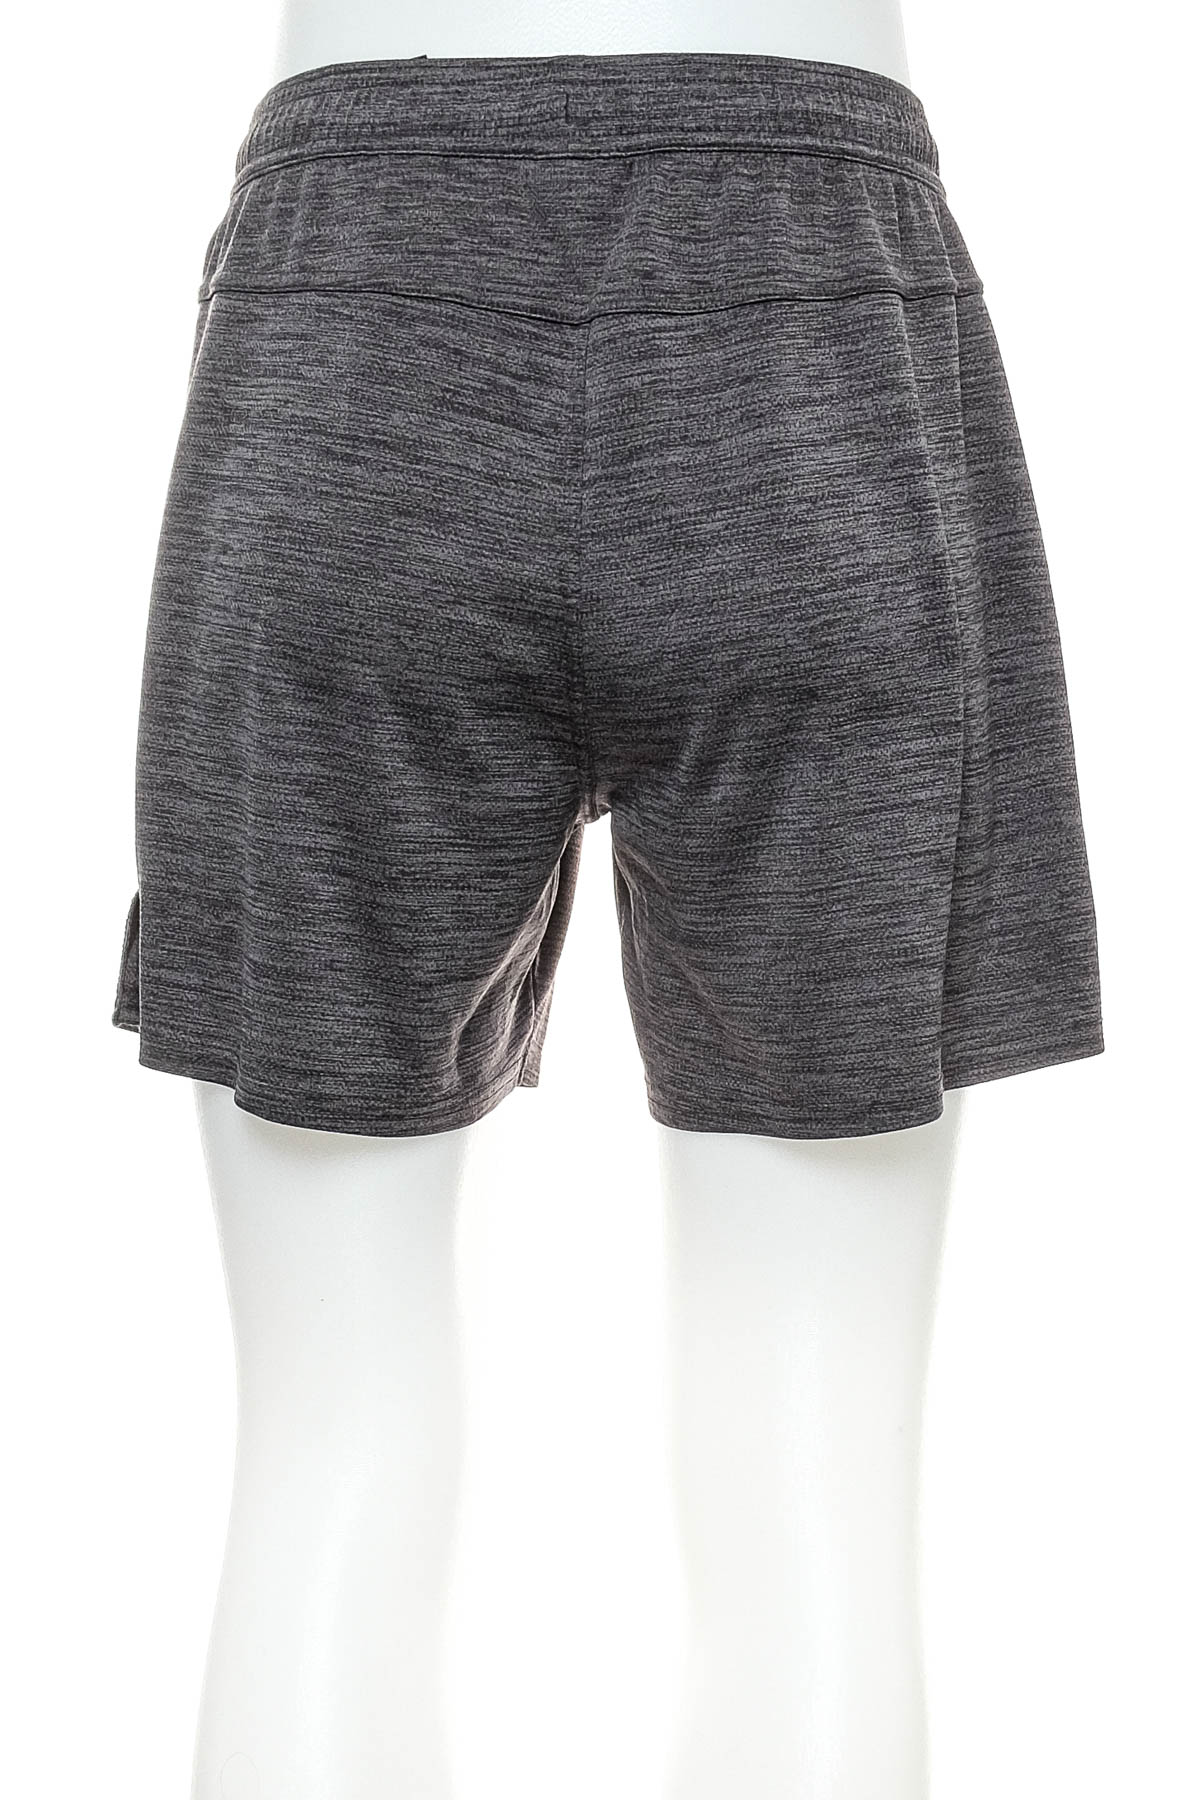 Female shorts - H&M Sport - 1